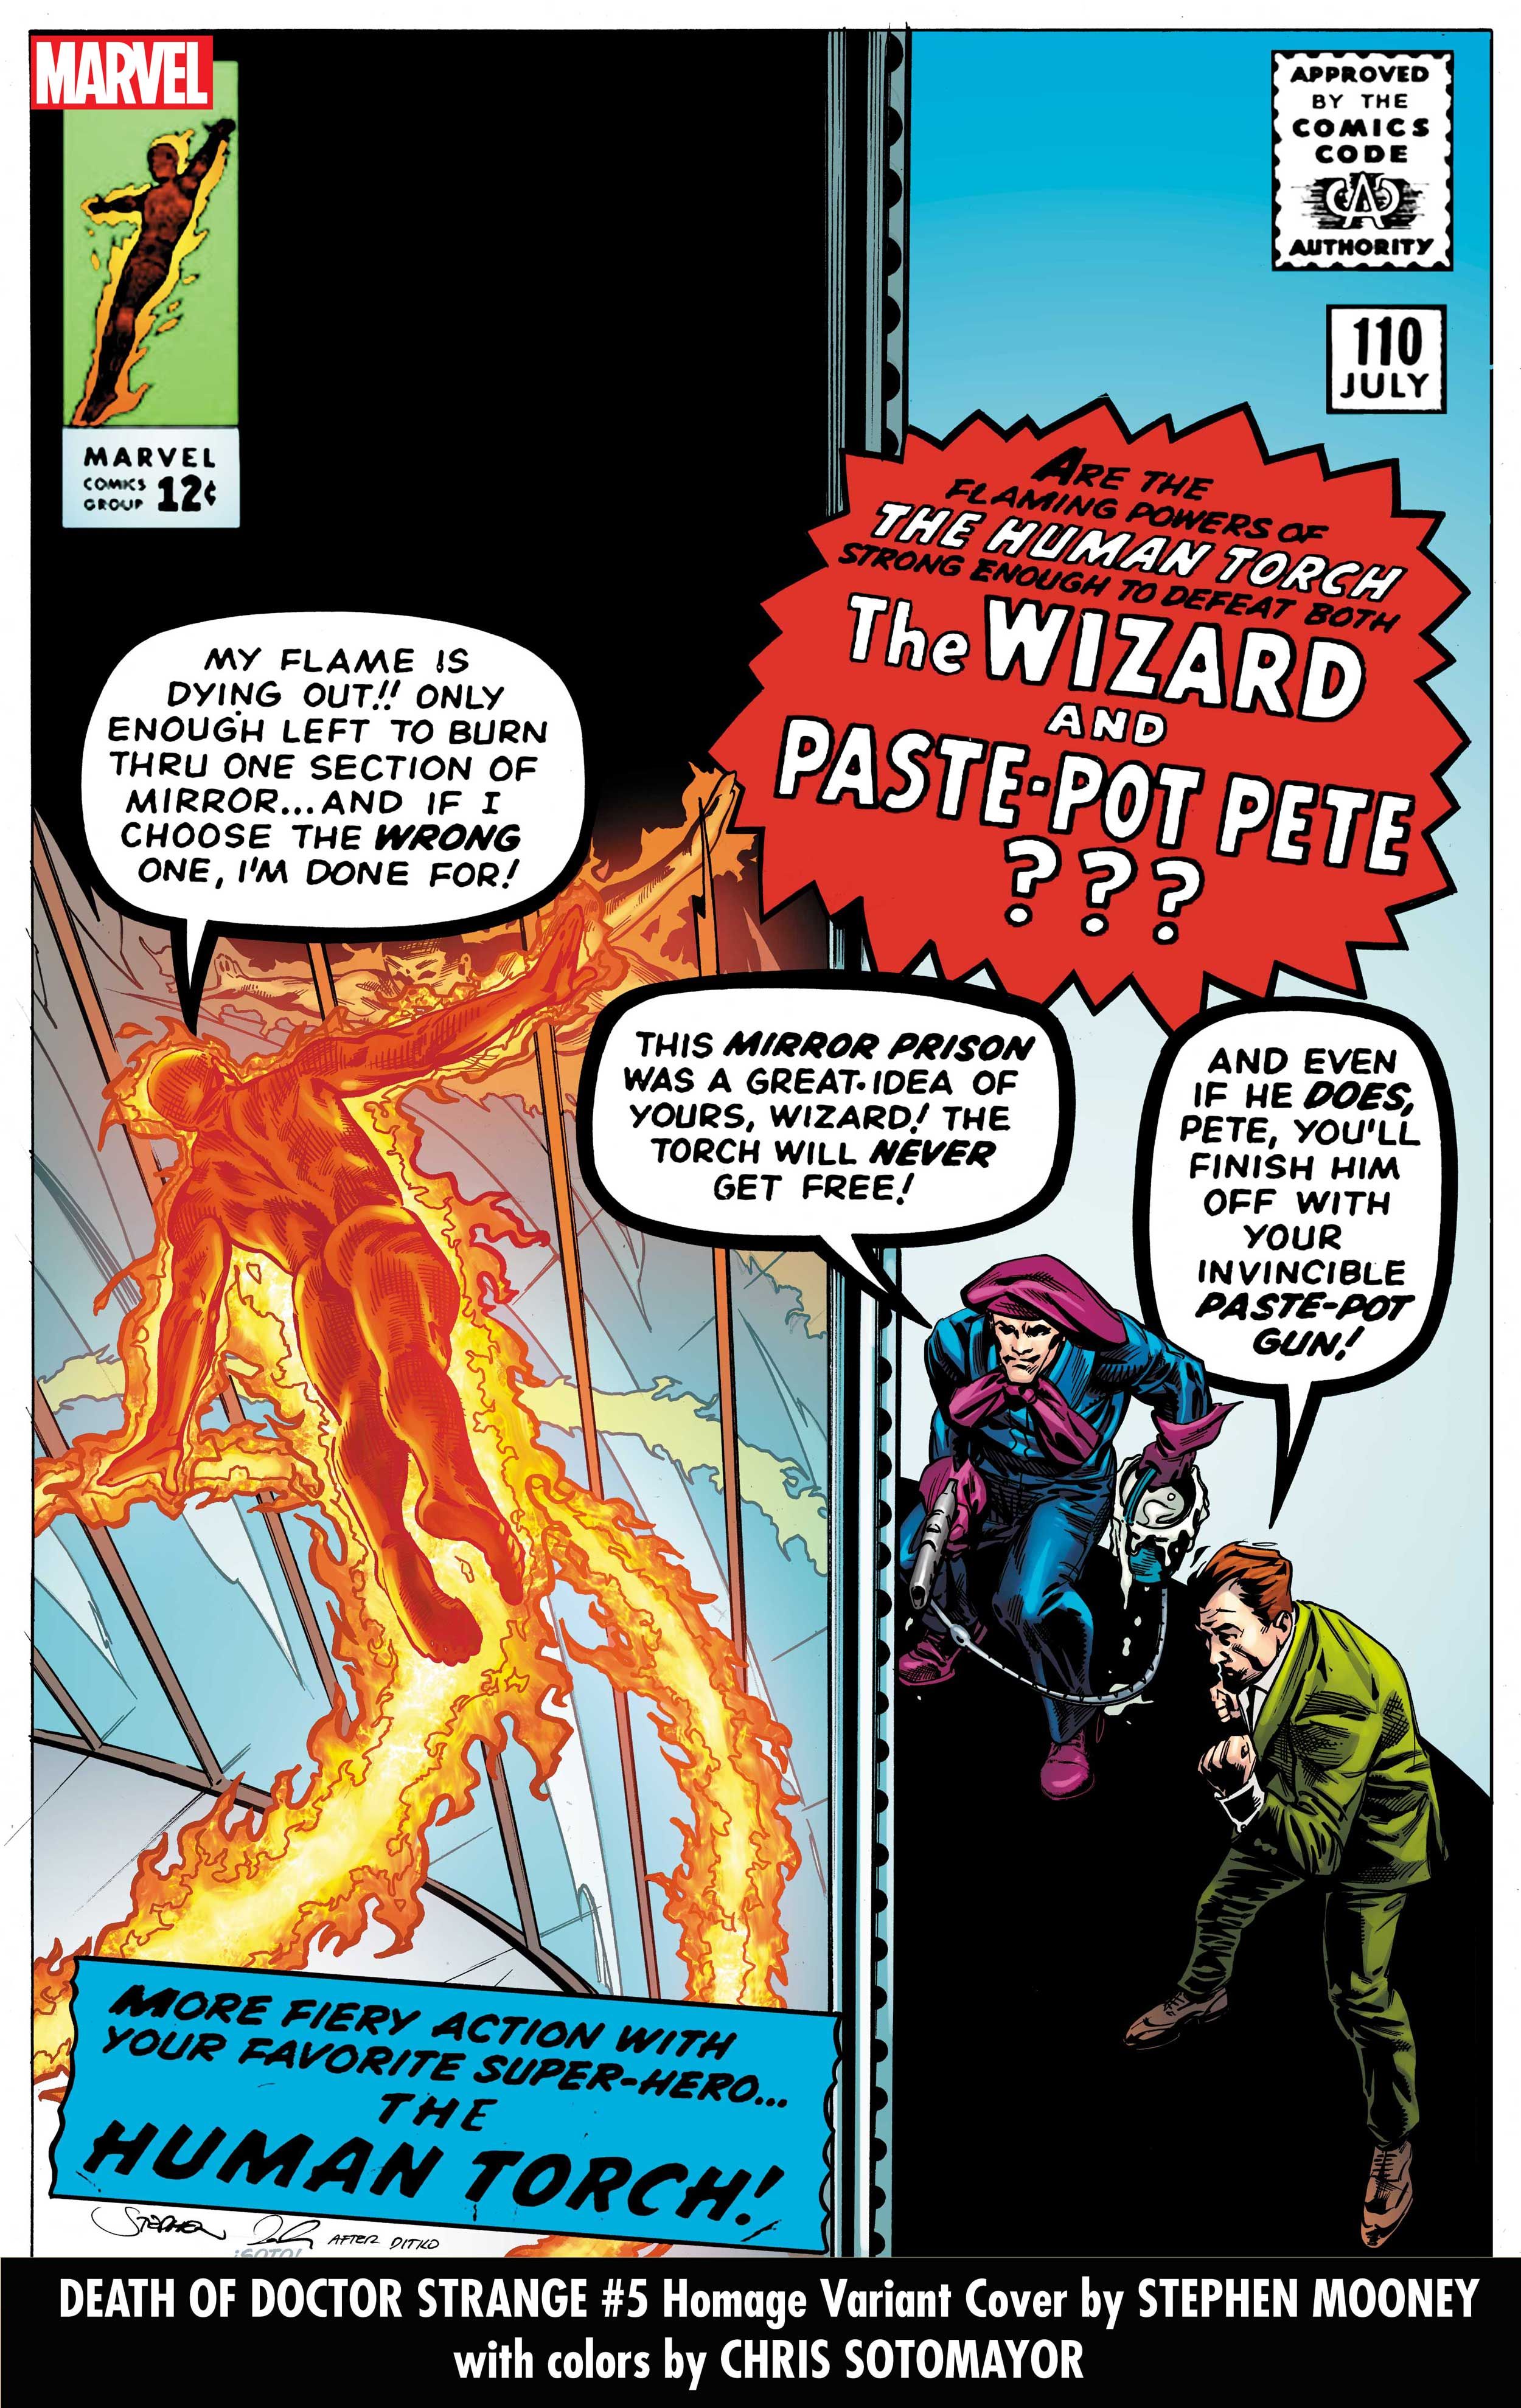 Stephen Mooney and Chris Sotomayor Homage Variant Cover for Death of Doctor Strange #5